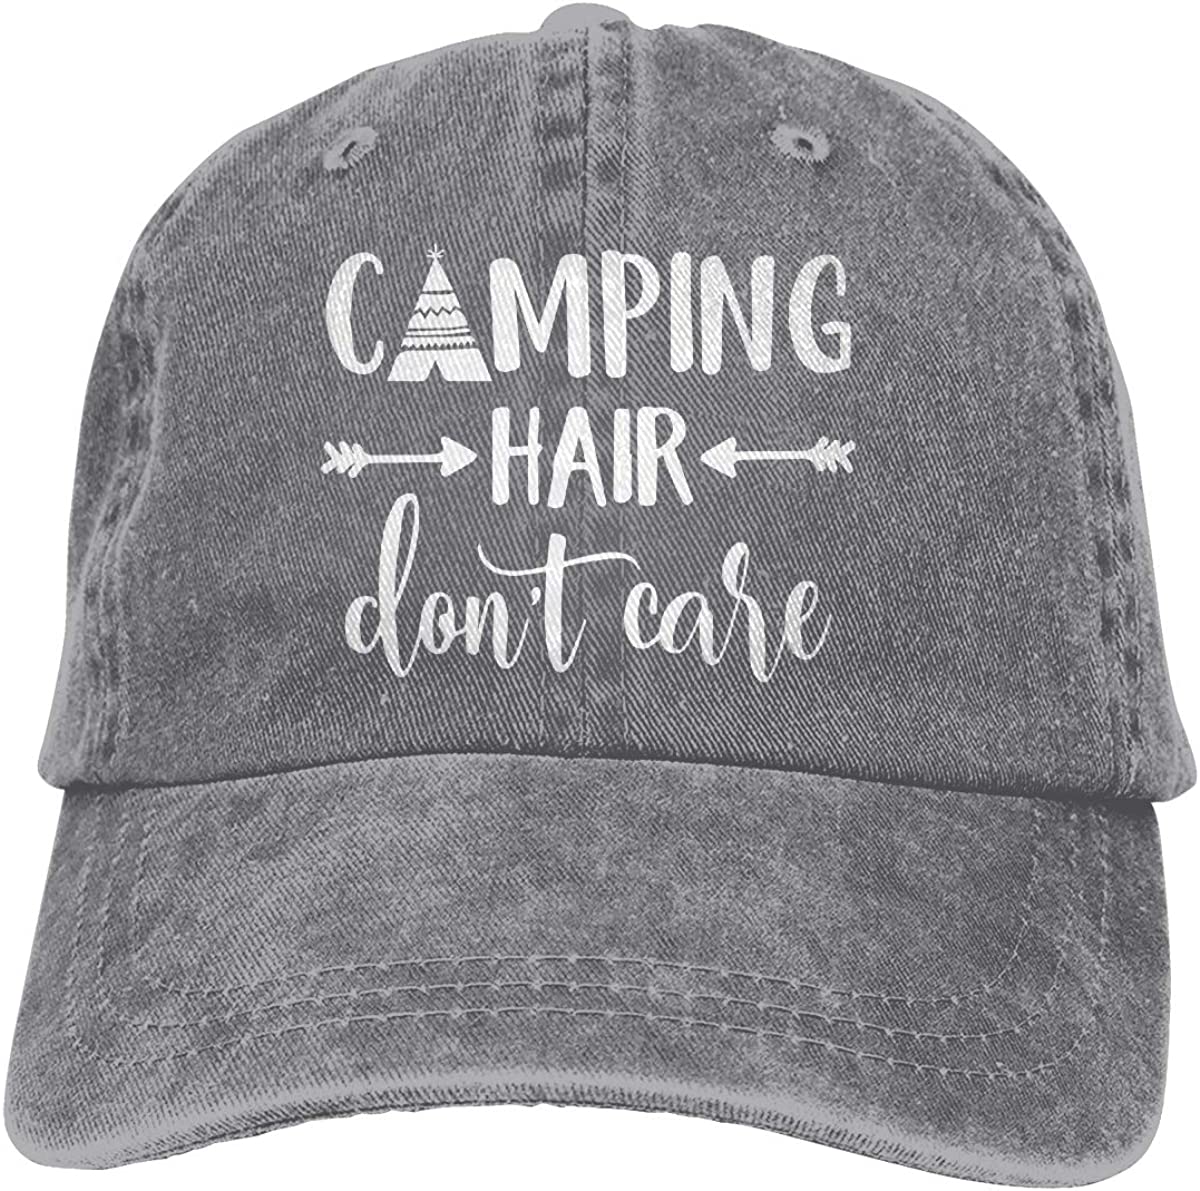 Camping Cap